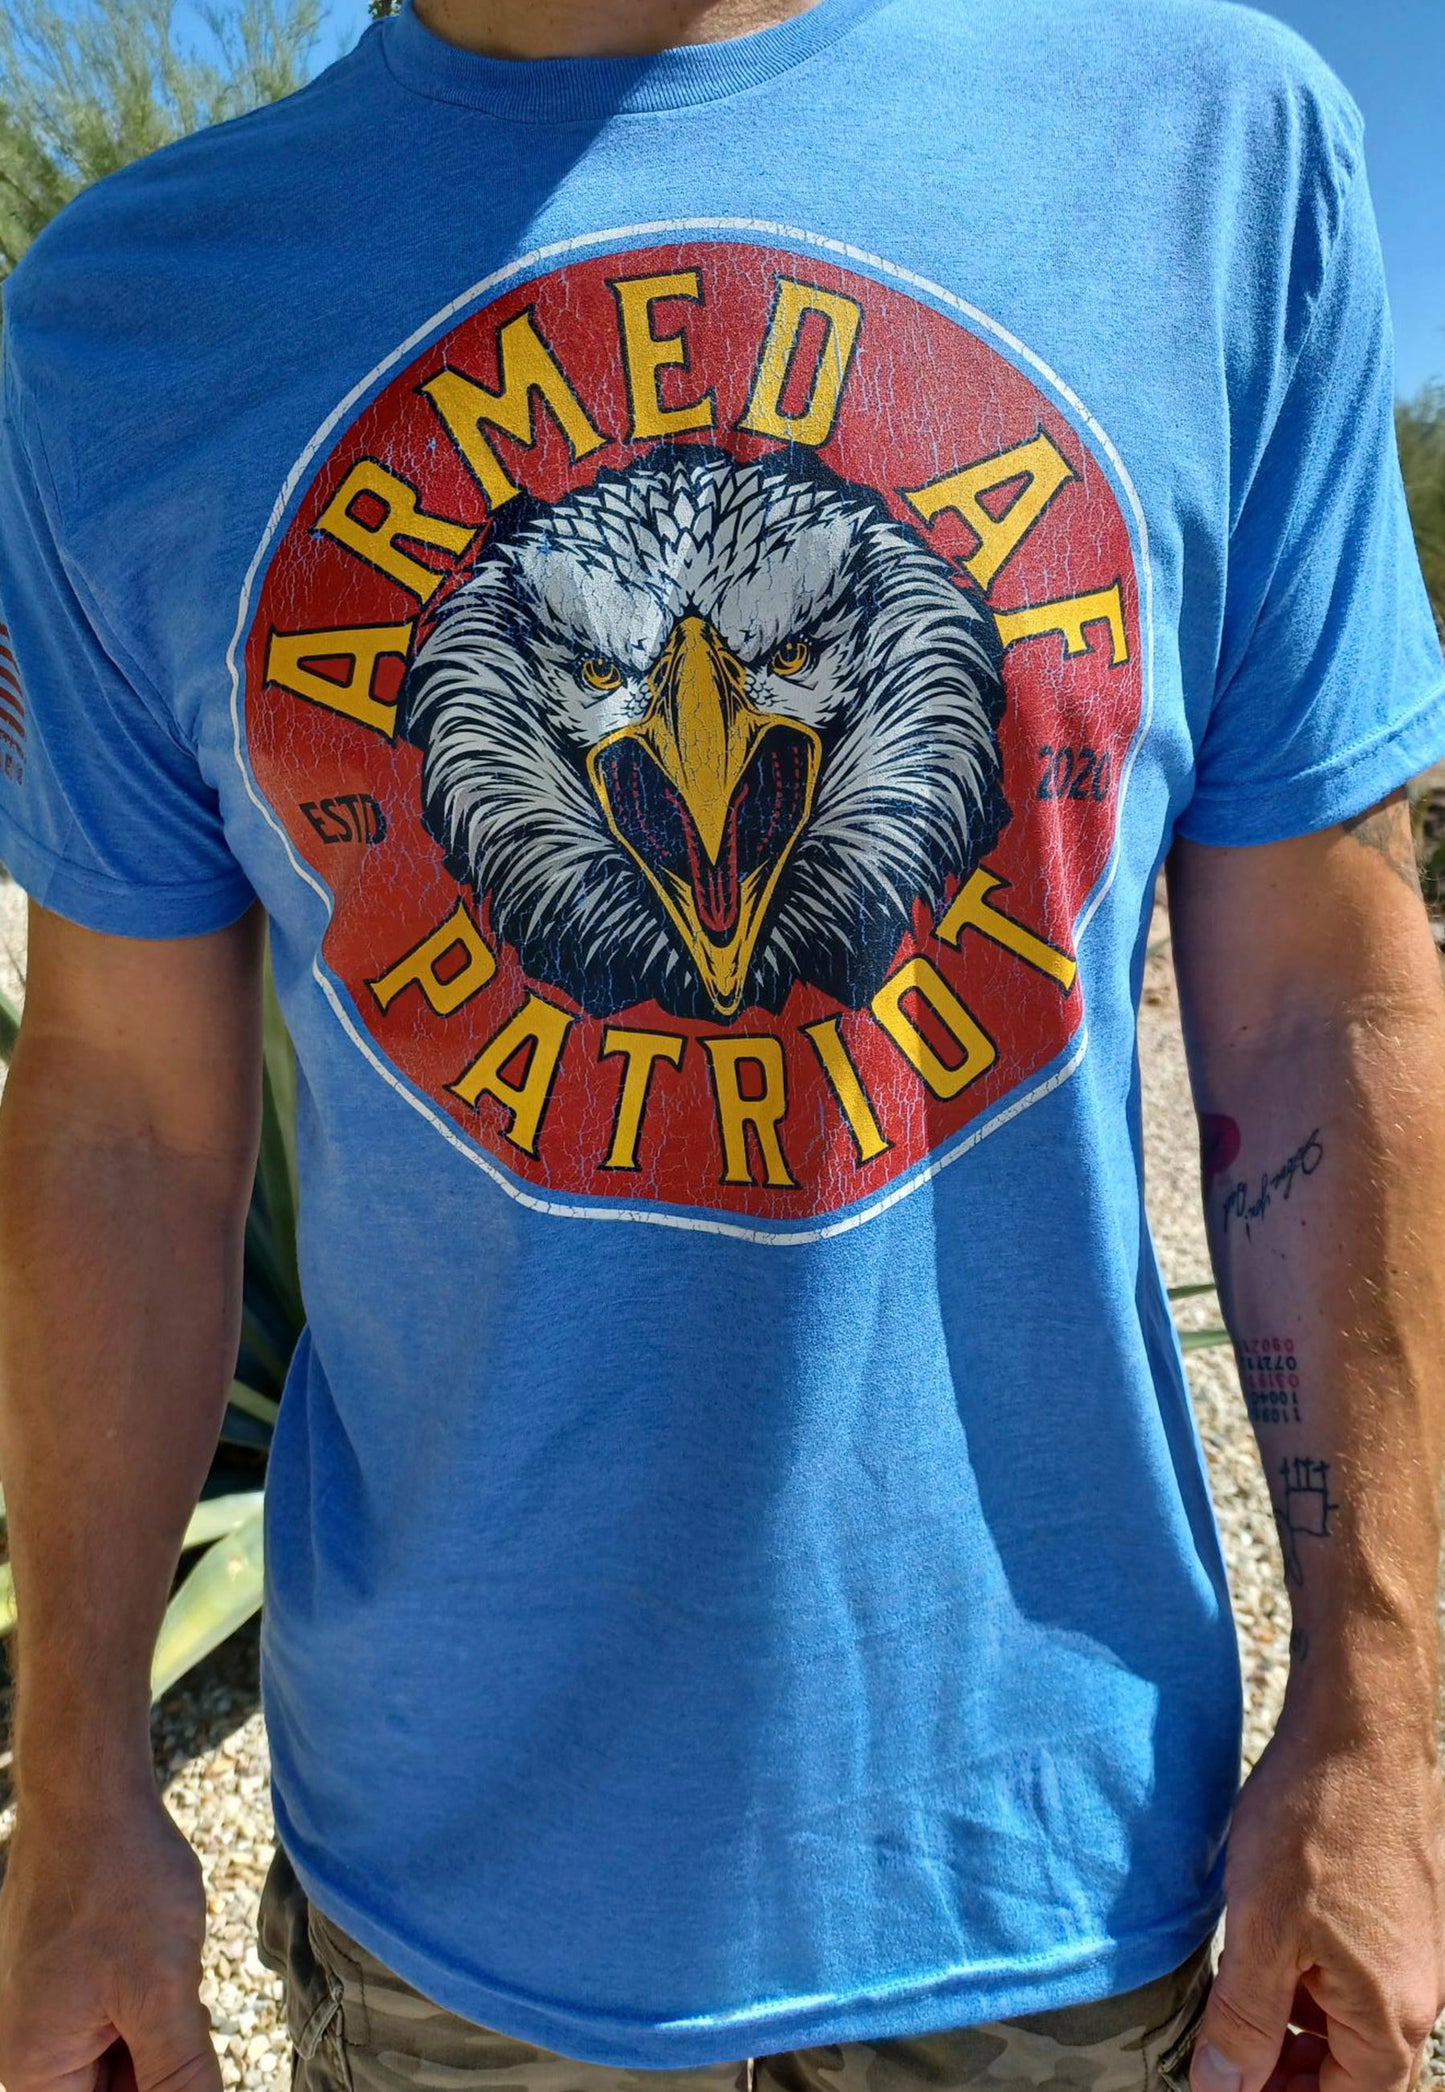 American eagle ArmedAF® t-shirt on model